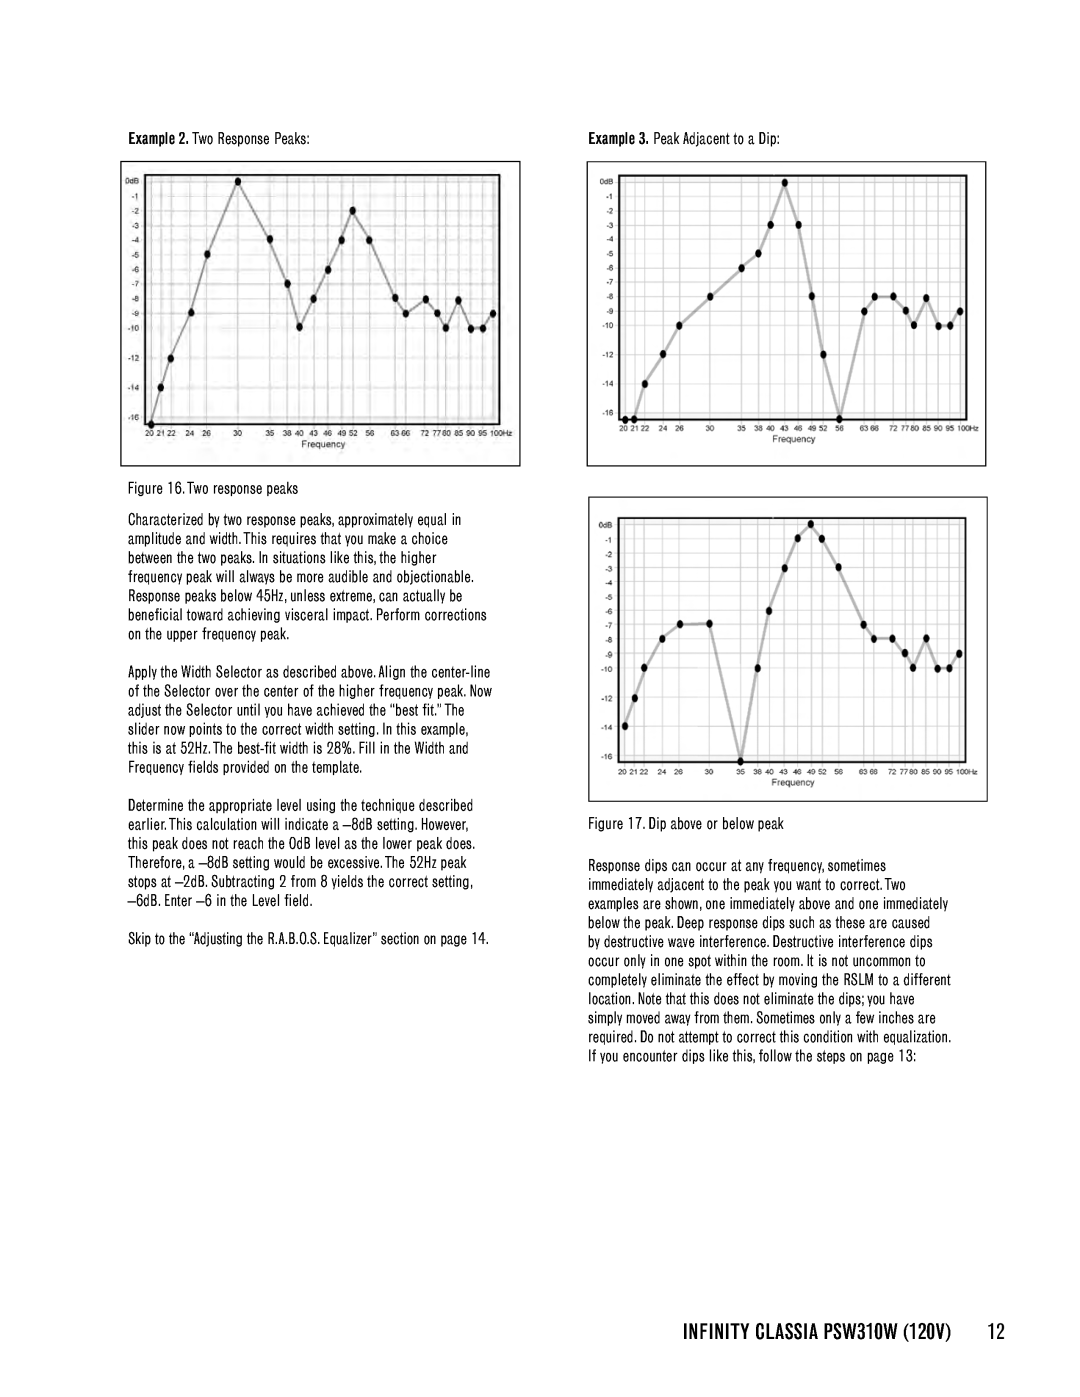 Infinity PSW310W manual Example 2. Two Response Peaks, Two response peaks, Example 3. Peak Adjacent to a Dip 